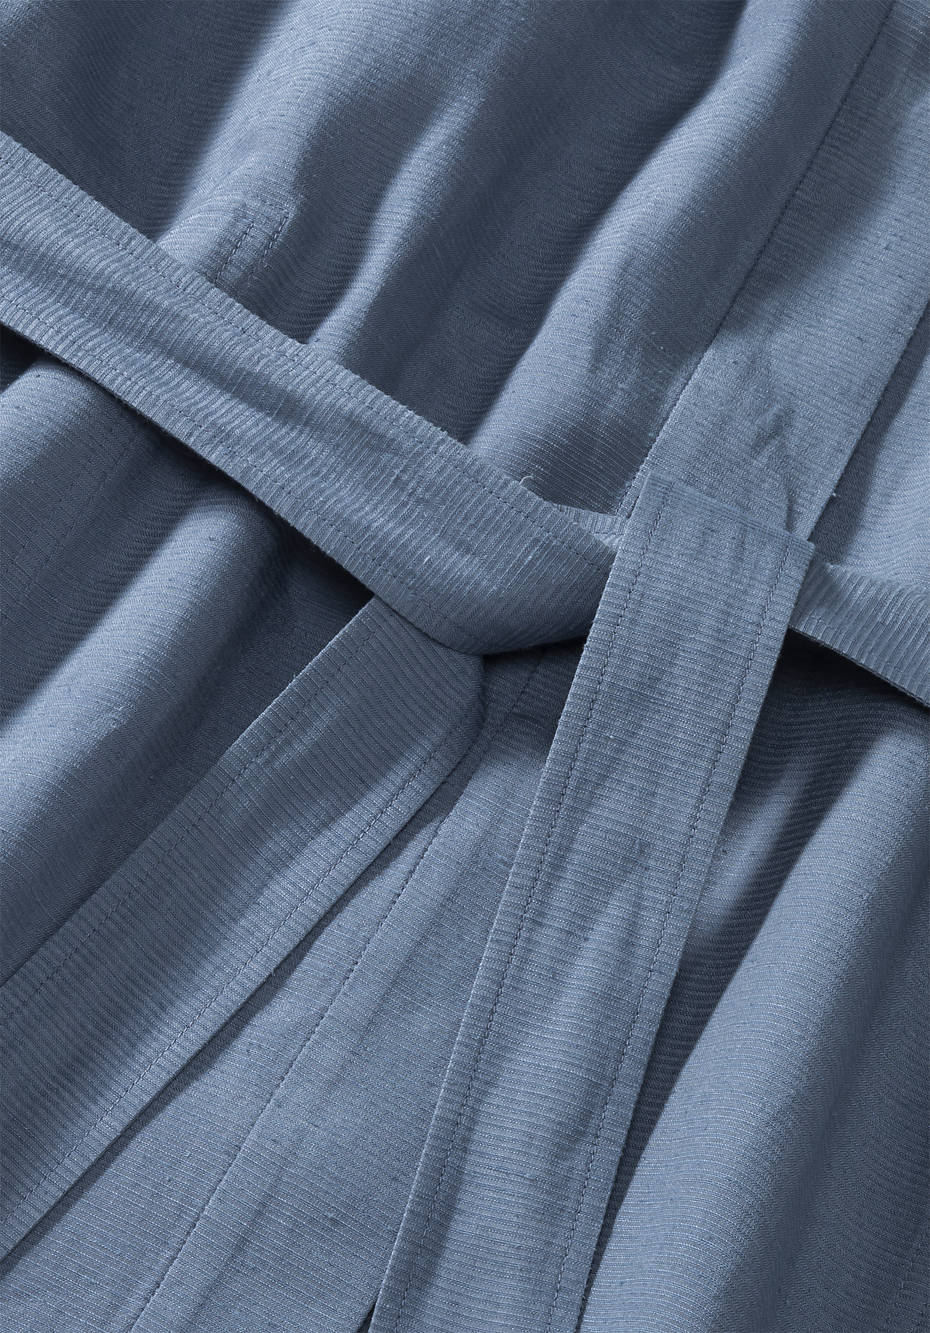 Midi dress made of silk with hemp and organic cotton